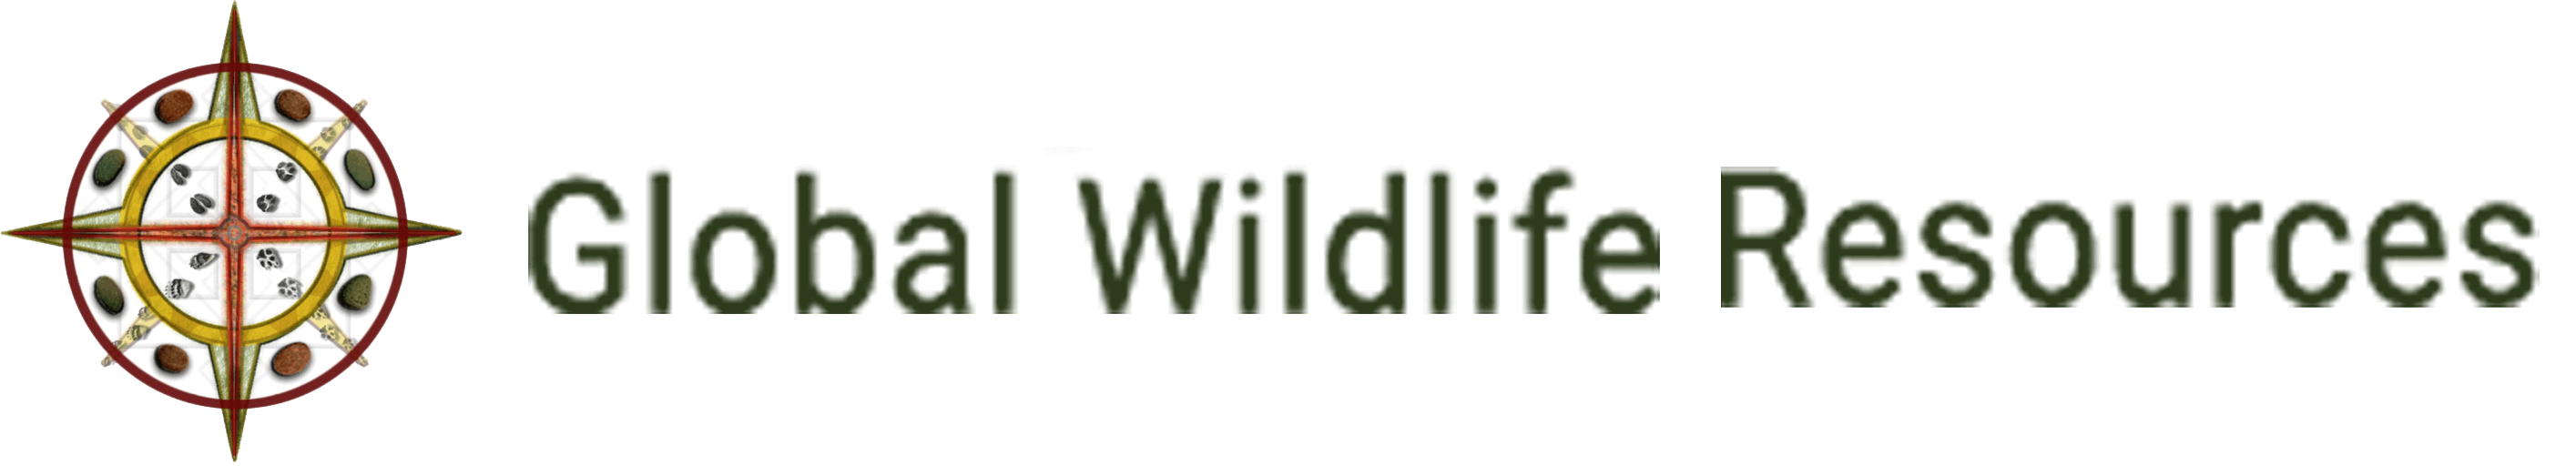 global wildlife resources